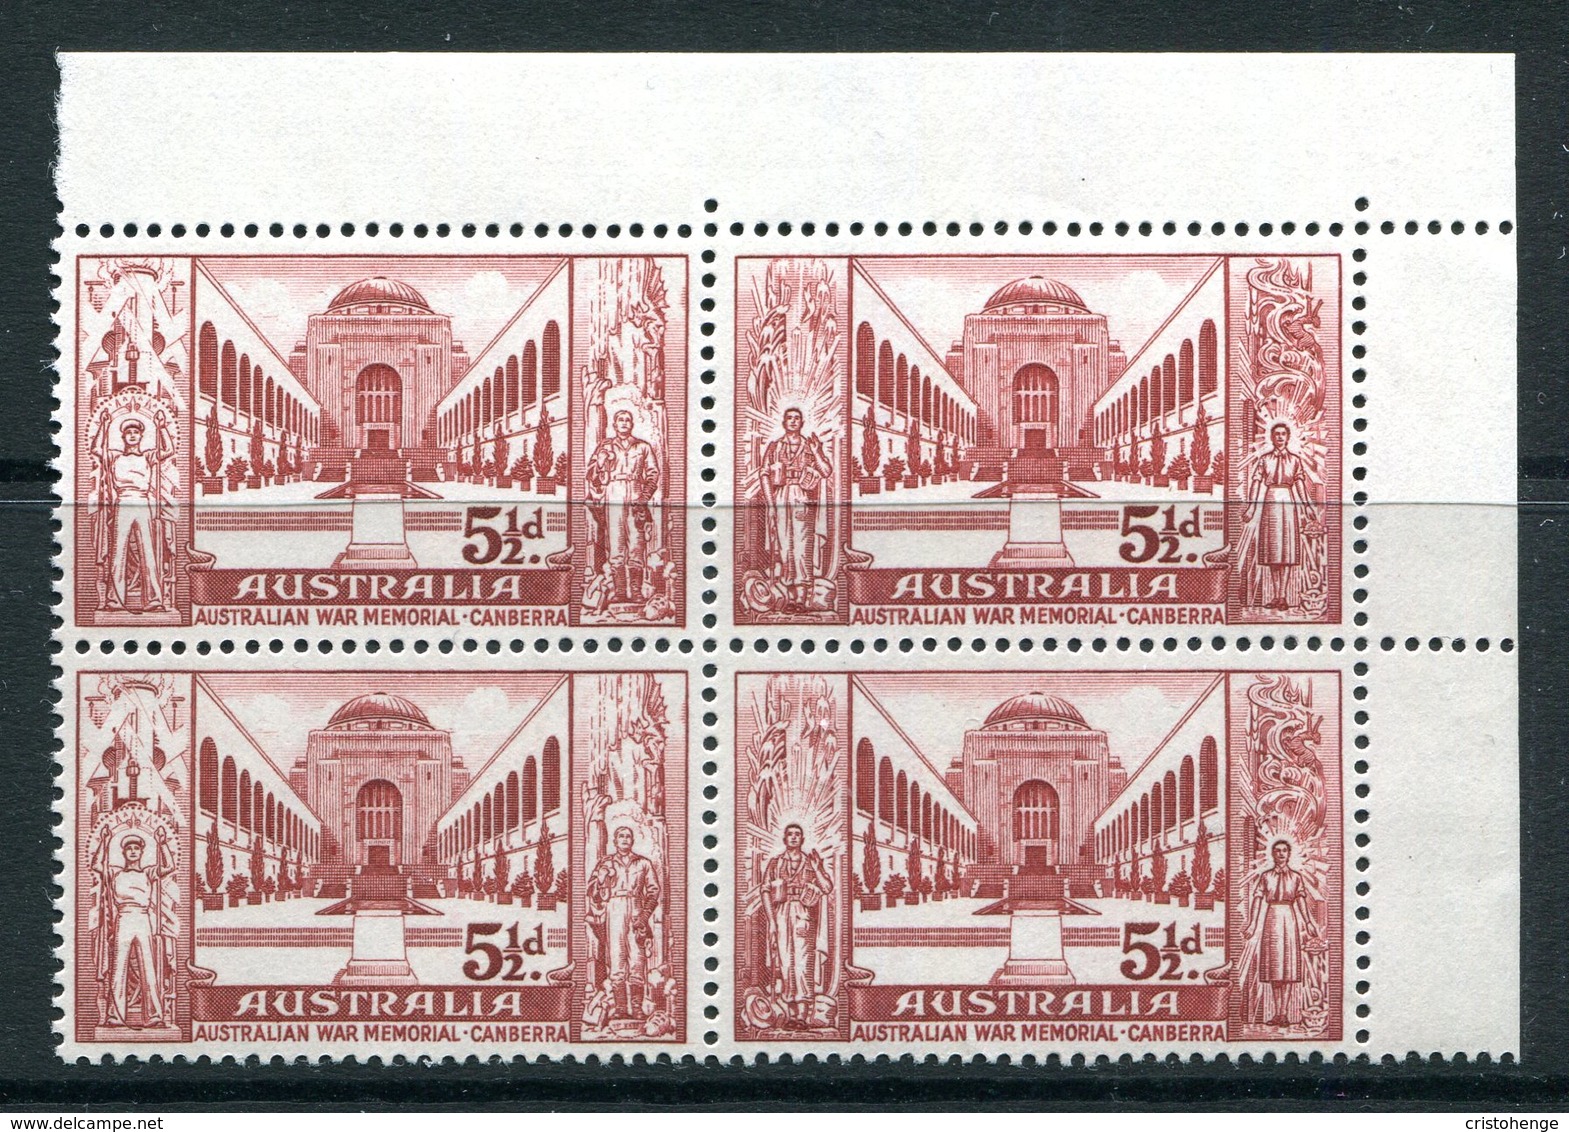 Australia 1958 Australian War Memorial Block HM (SG 302-303) - Mint Stamps